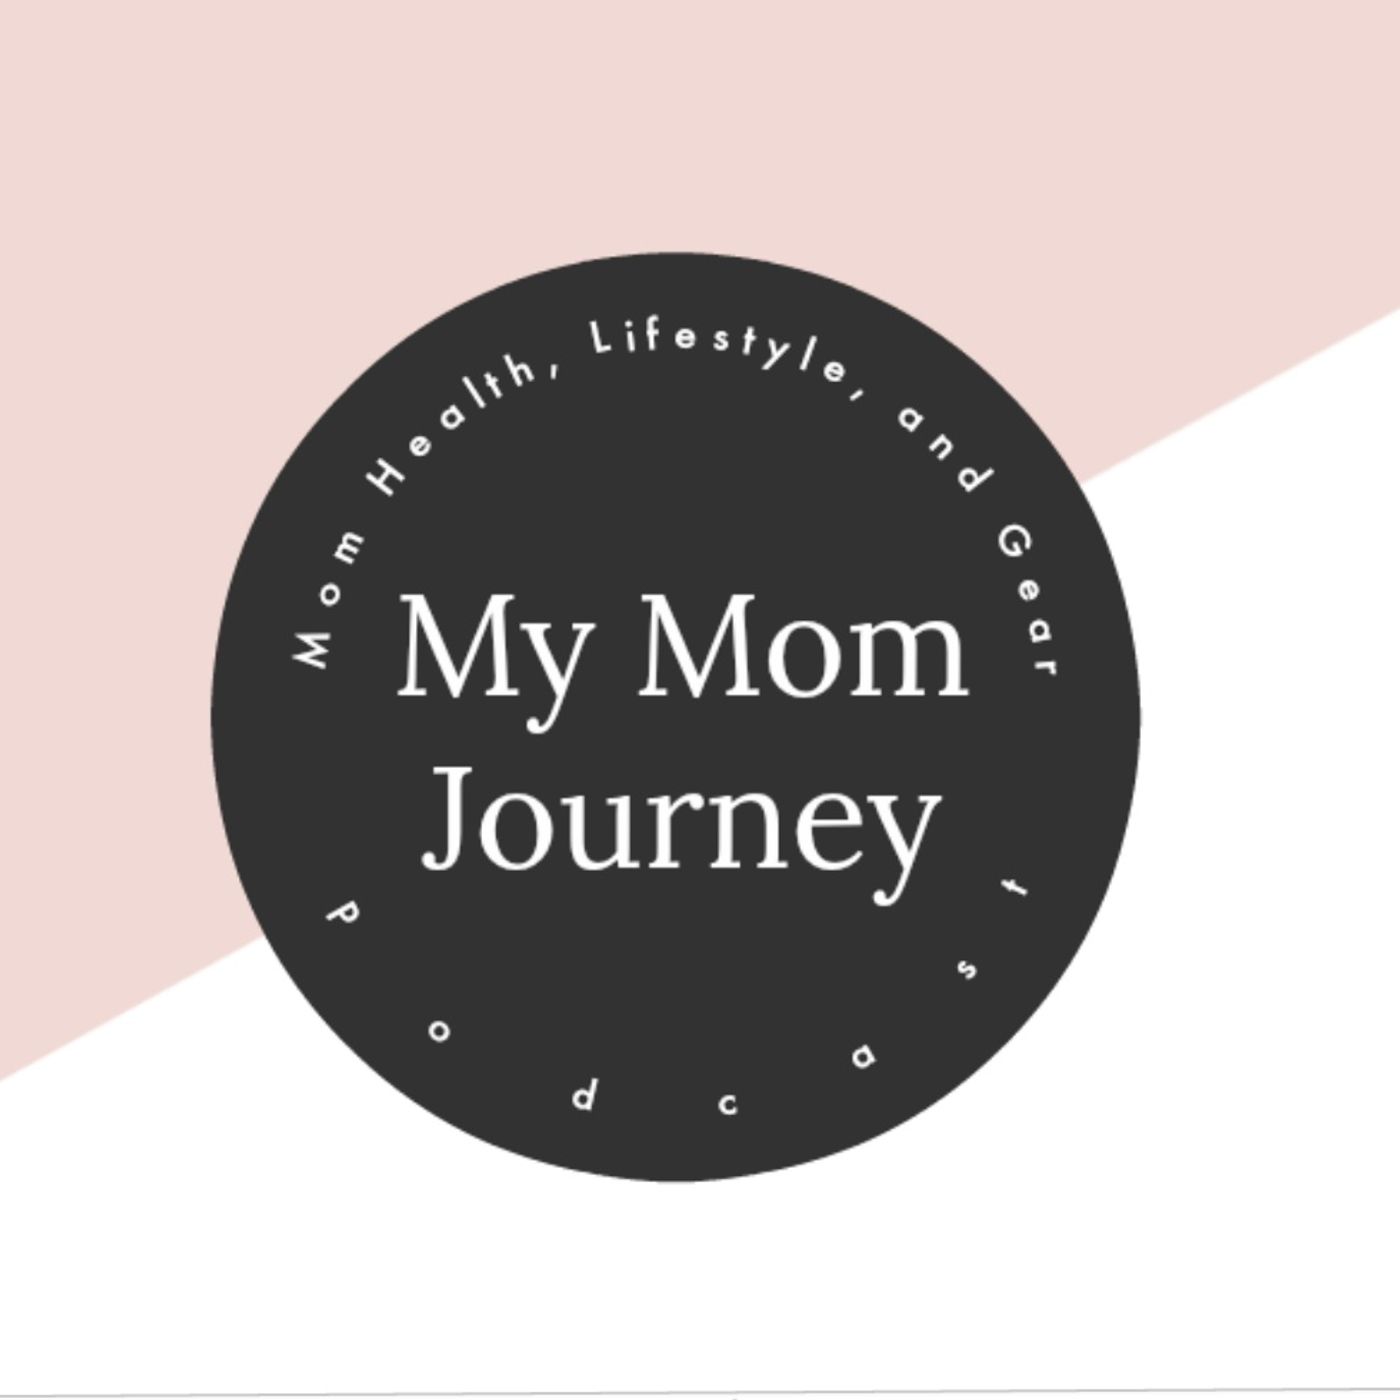 My Mom Journey